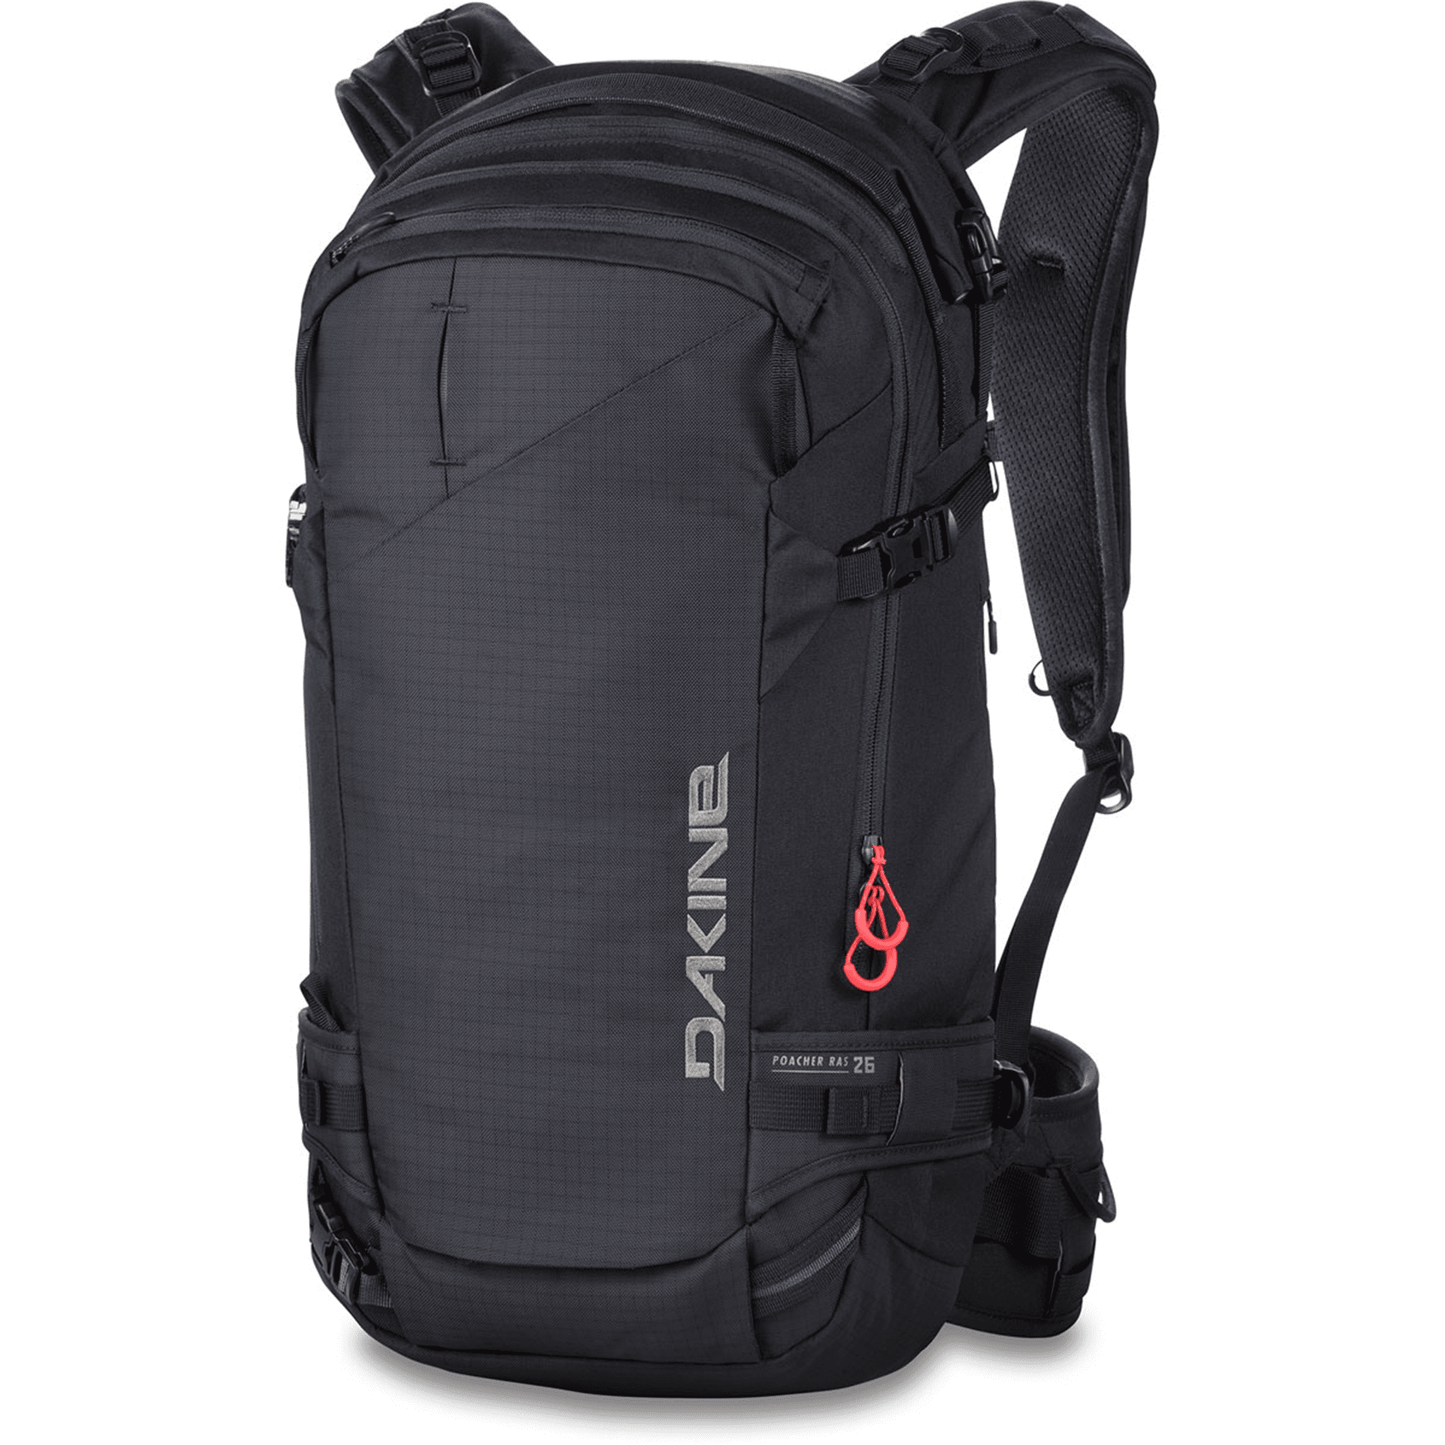 Dakine Poacher RAS 26L Airbag Backpack Kit